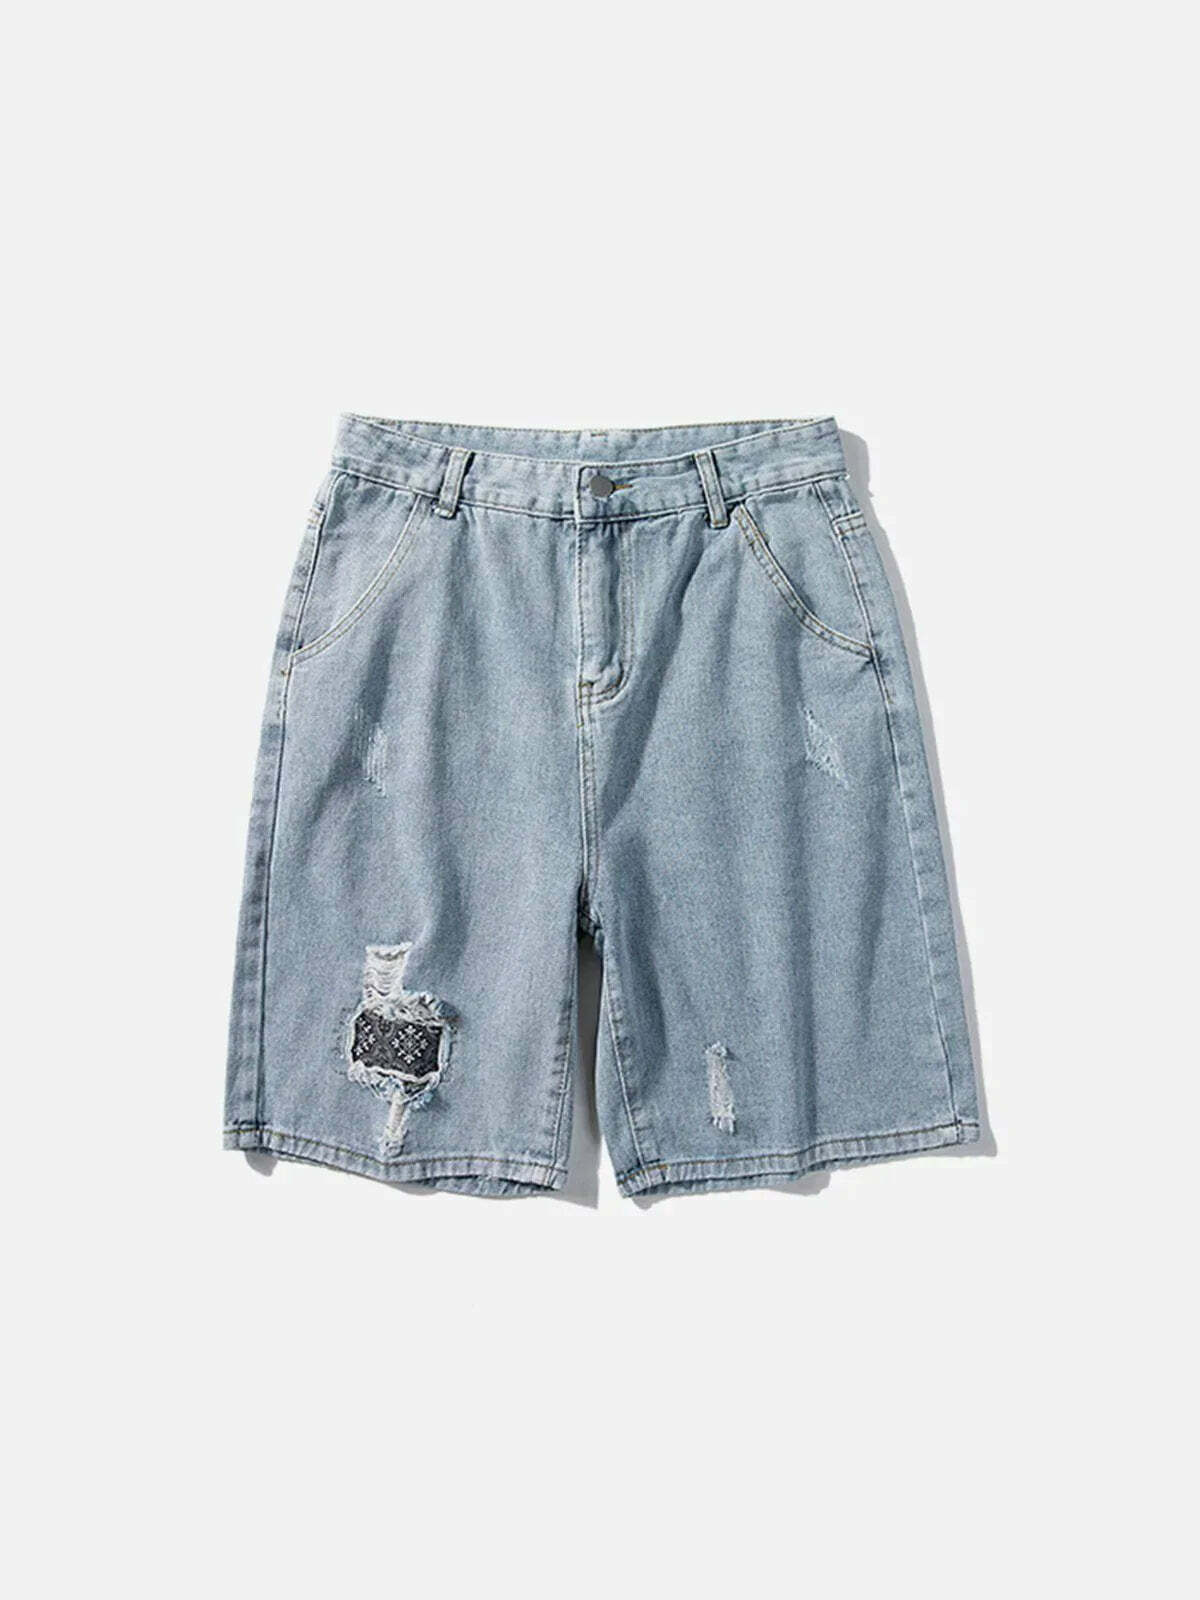 retro shredded denim shorts edgy streetwear staple 3511